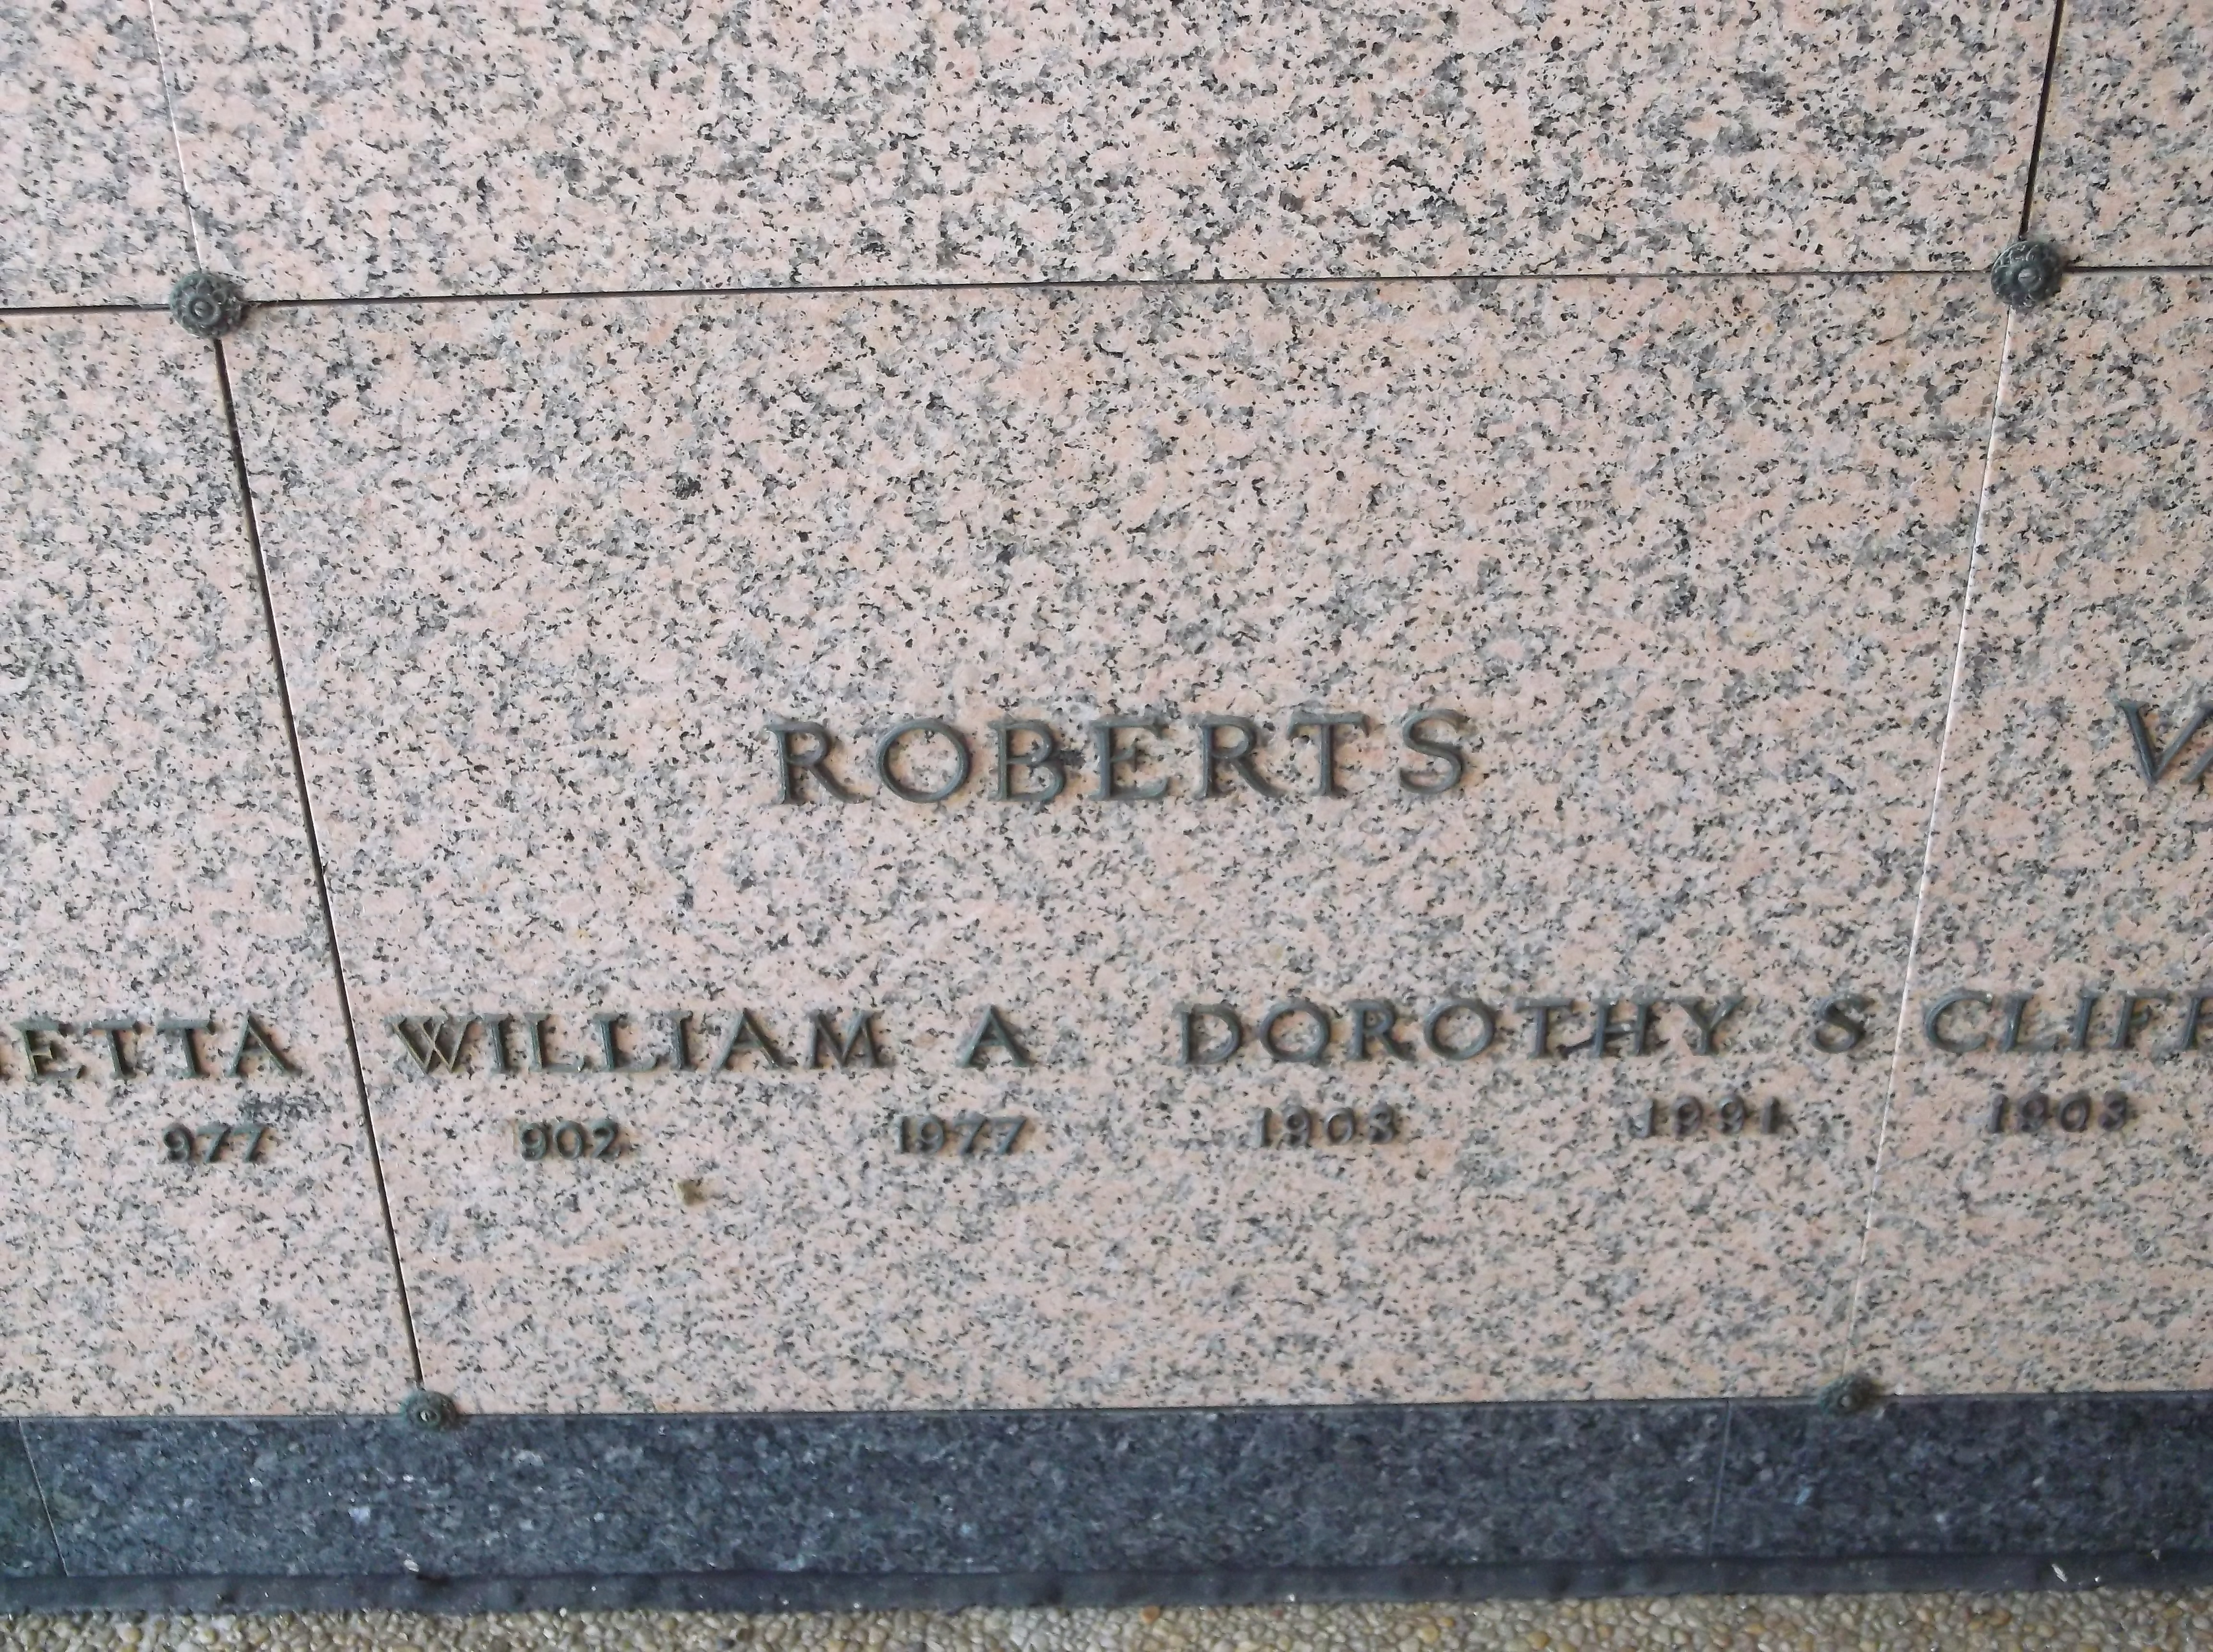 Dorothy S Roberts